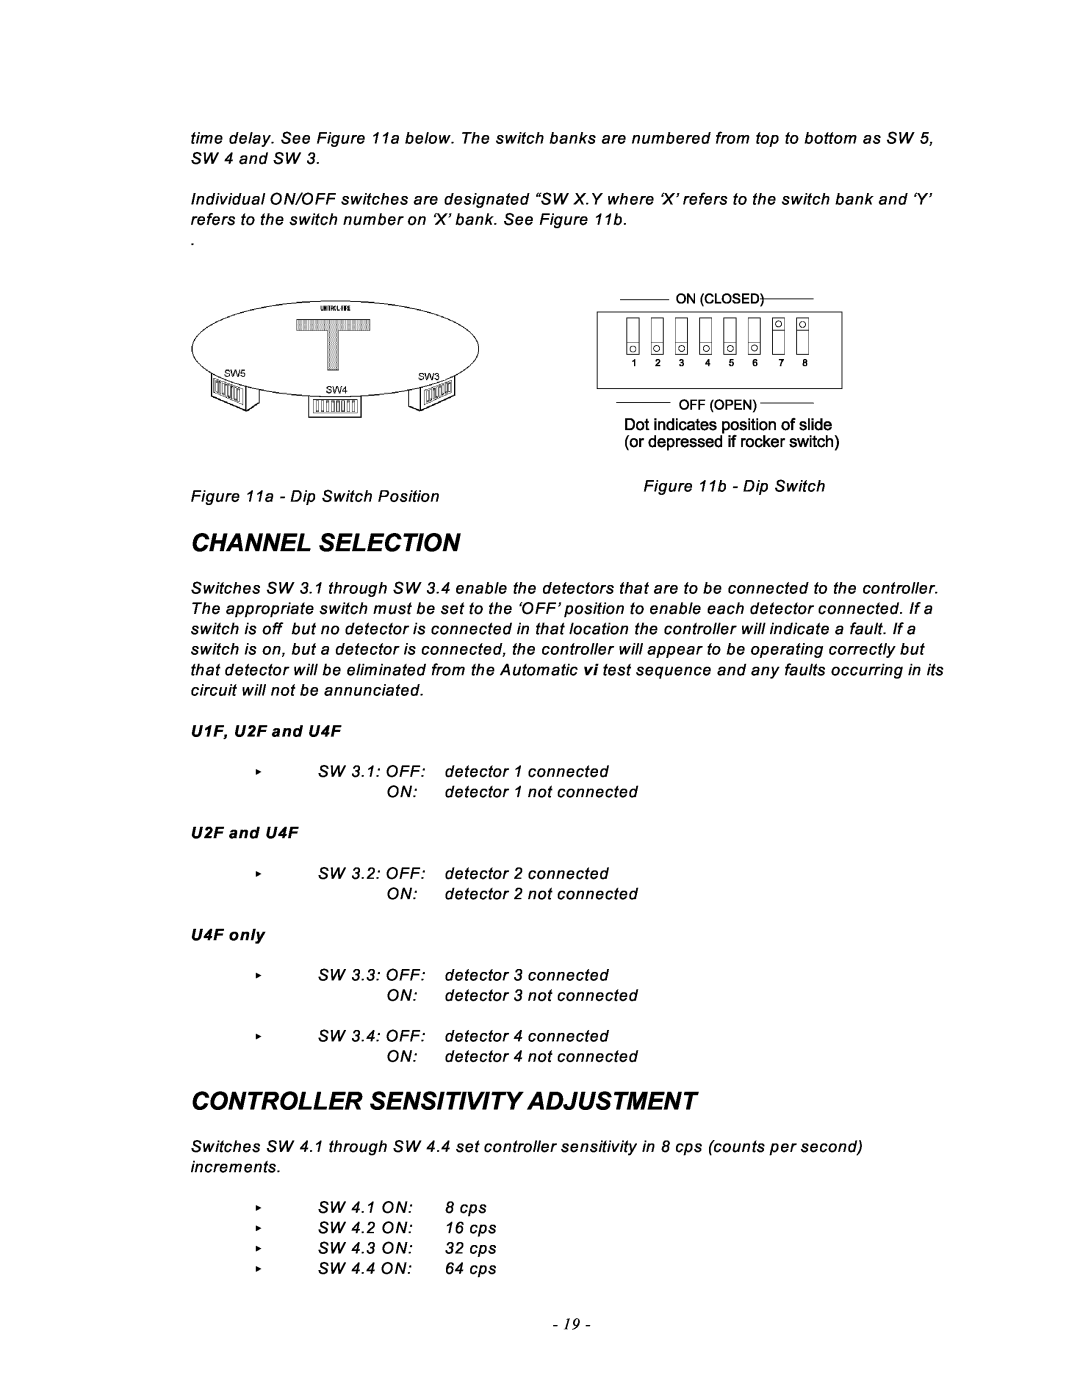 Emerson UVC120, MAN -0016-00 manual Channel Selection, Controller Sensitivity Adjustment, U1F, U2F and U4F, U4F only 